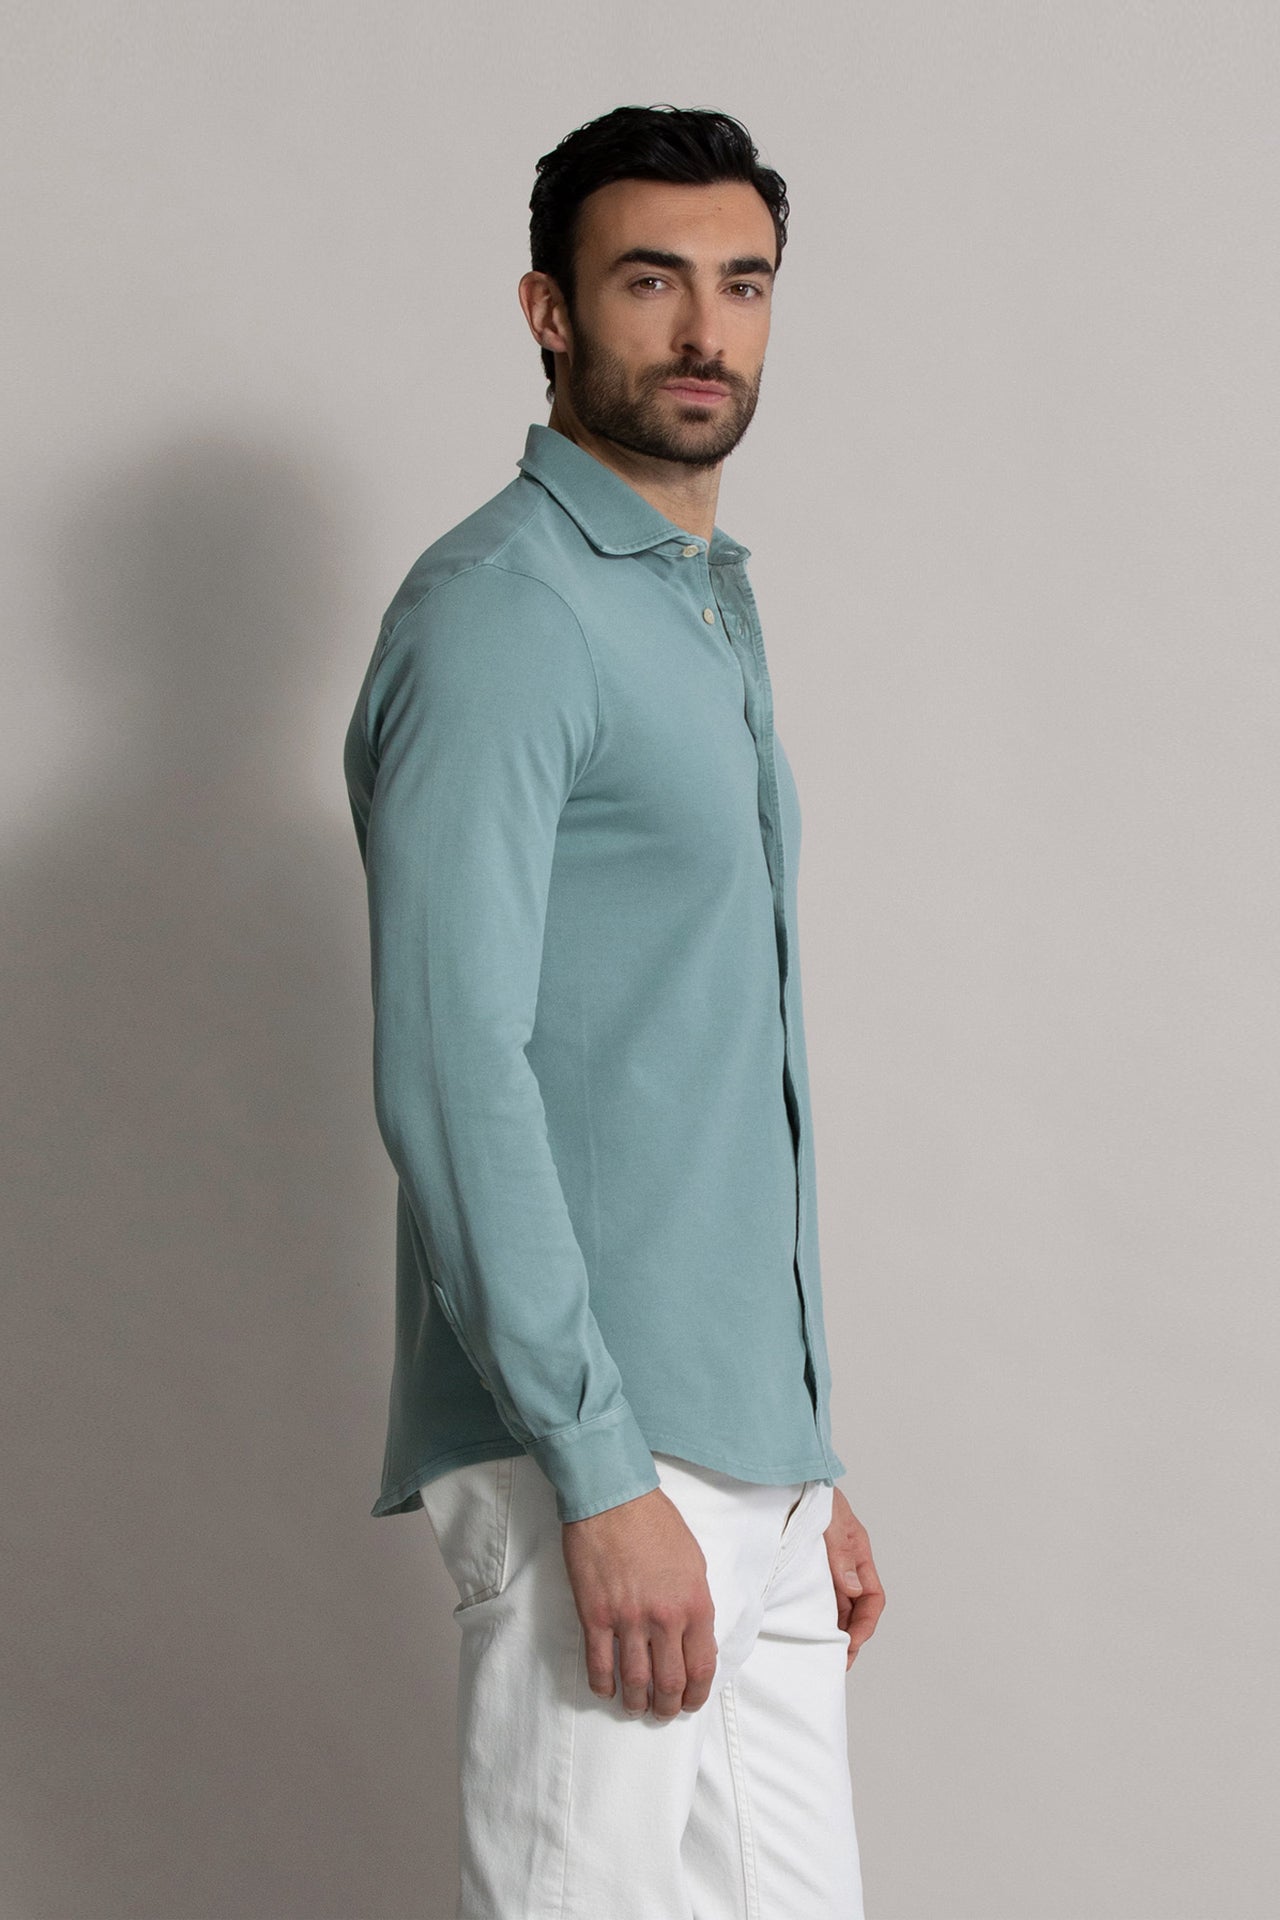 Men's designer shirt in organic cotton: sea green - side view